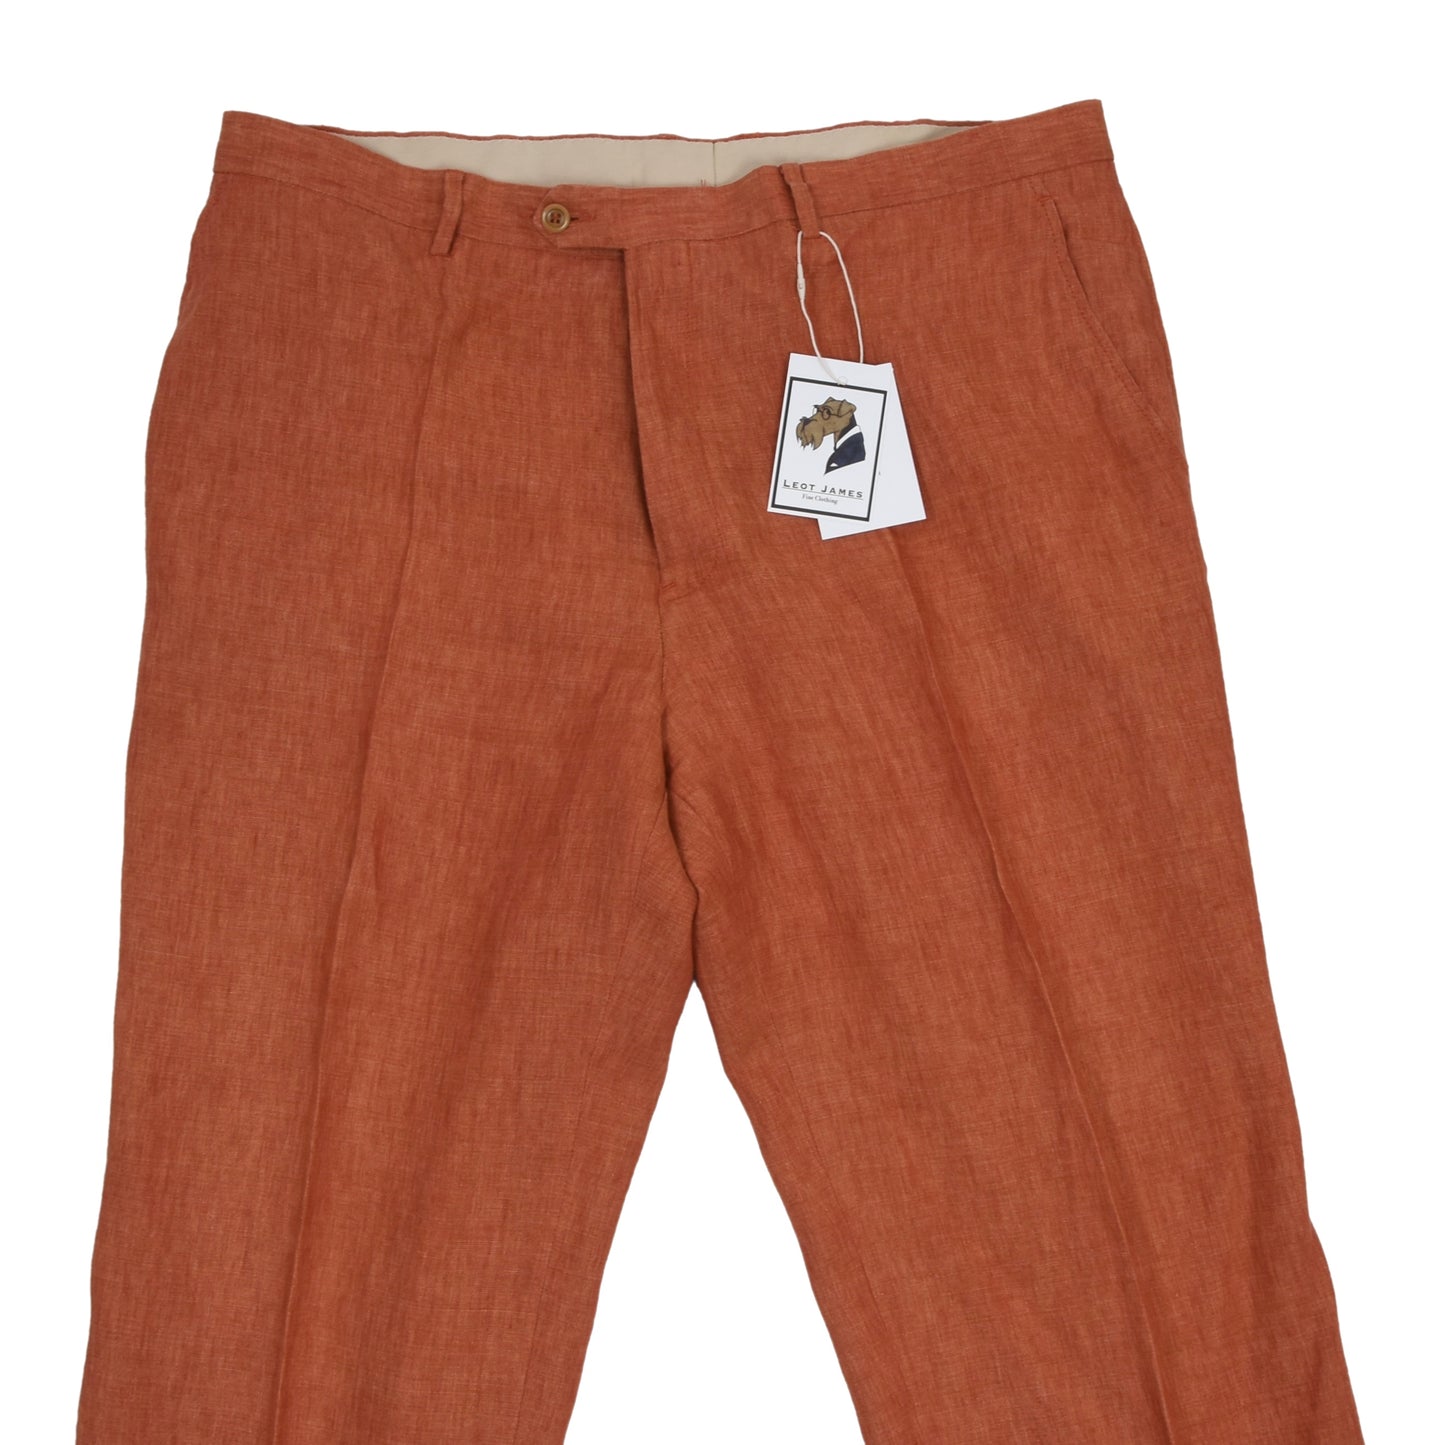 Mabitex 100% Linen Pants Size 60 - Orange